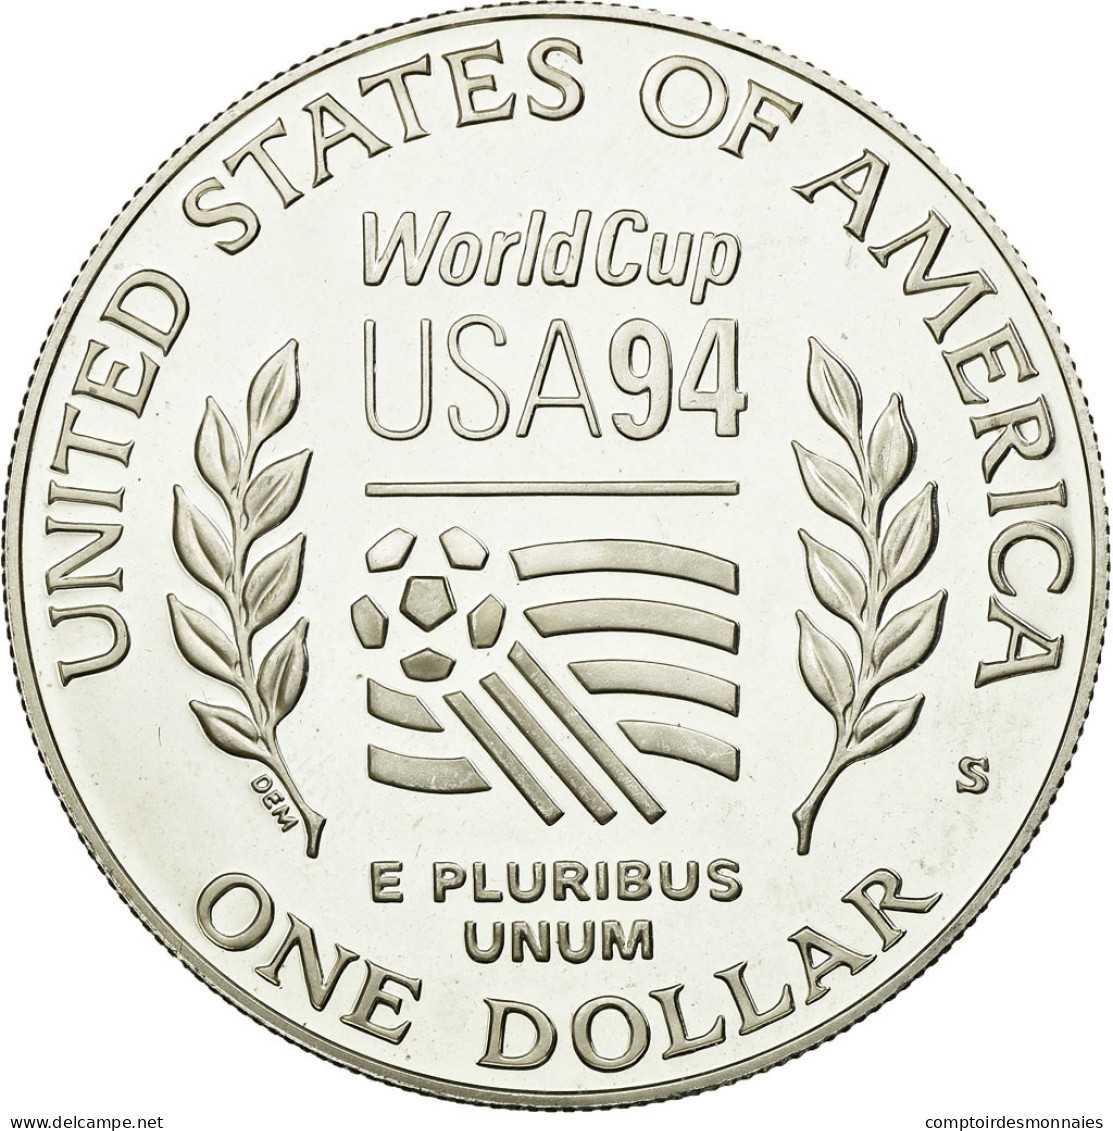 Monnaie, États-Unis, Dollar, 1994, U.S. Mint, San Francisco, SPL+, Argent - Gedenkmünzen